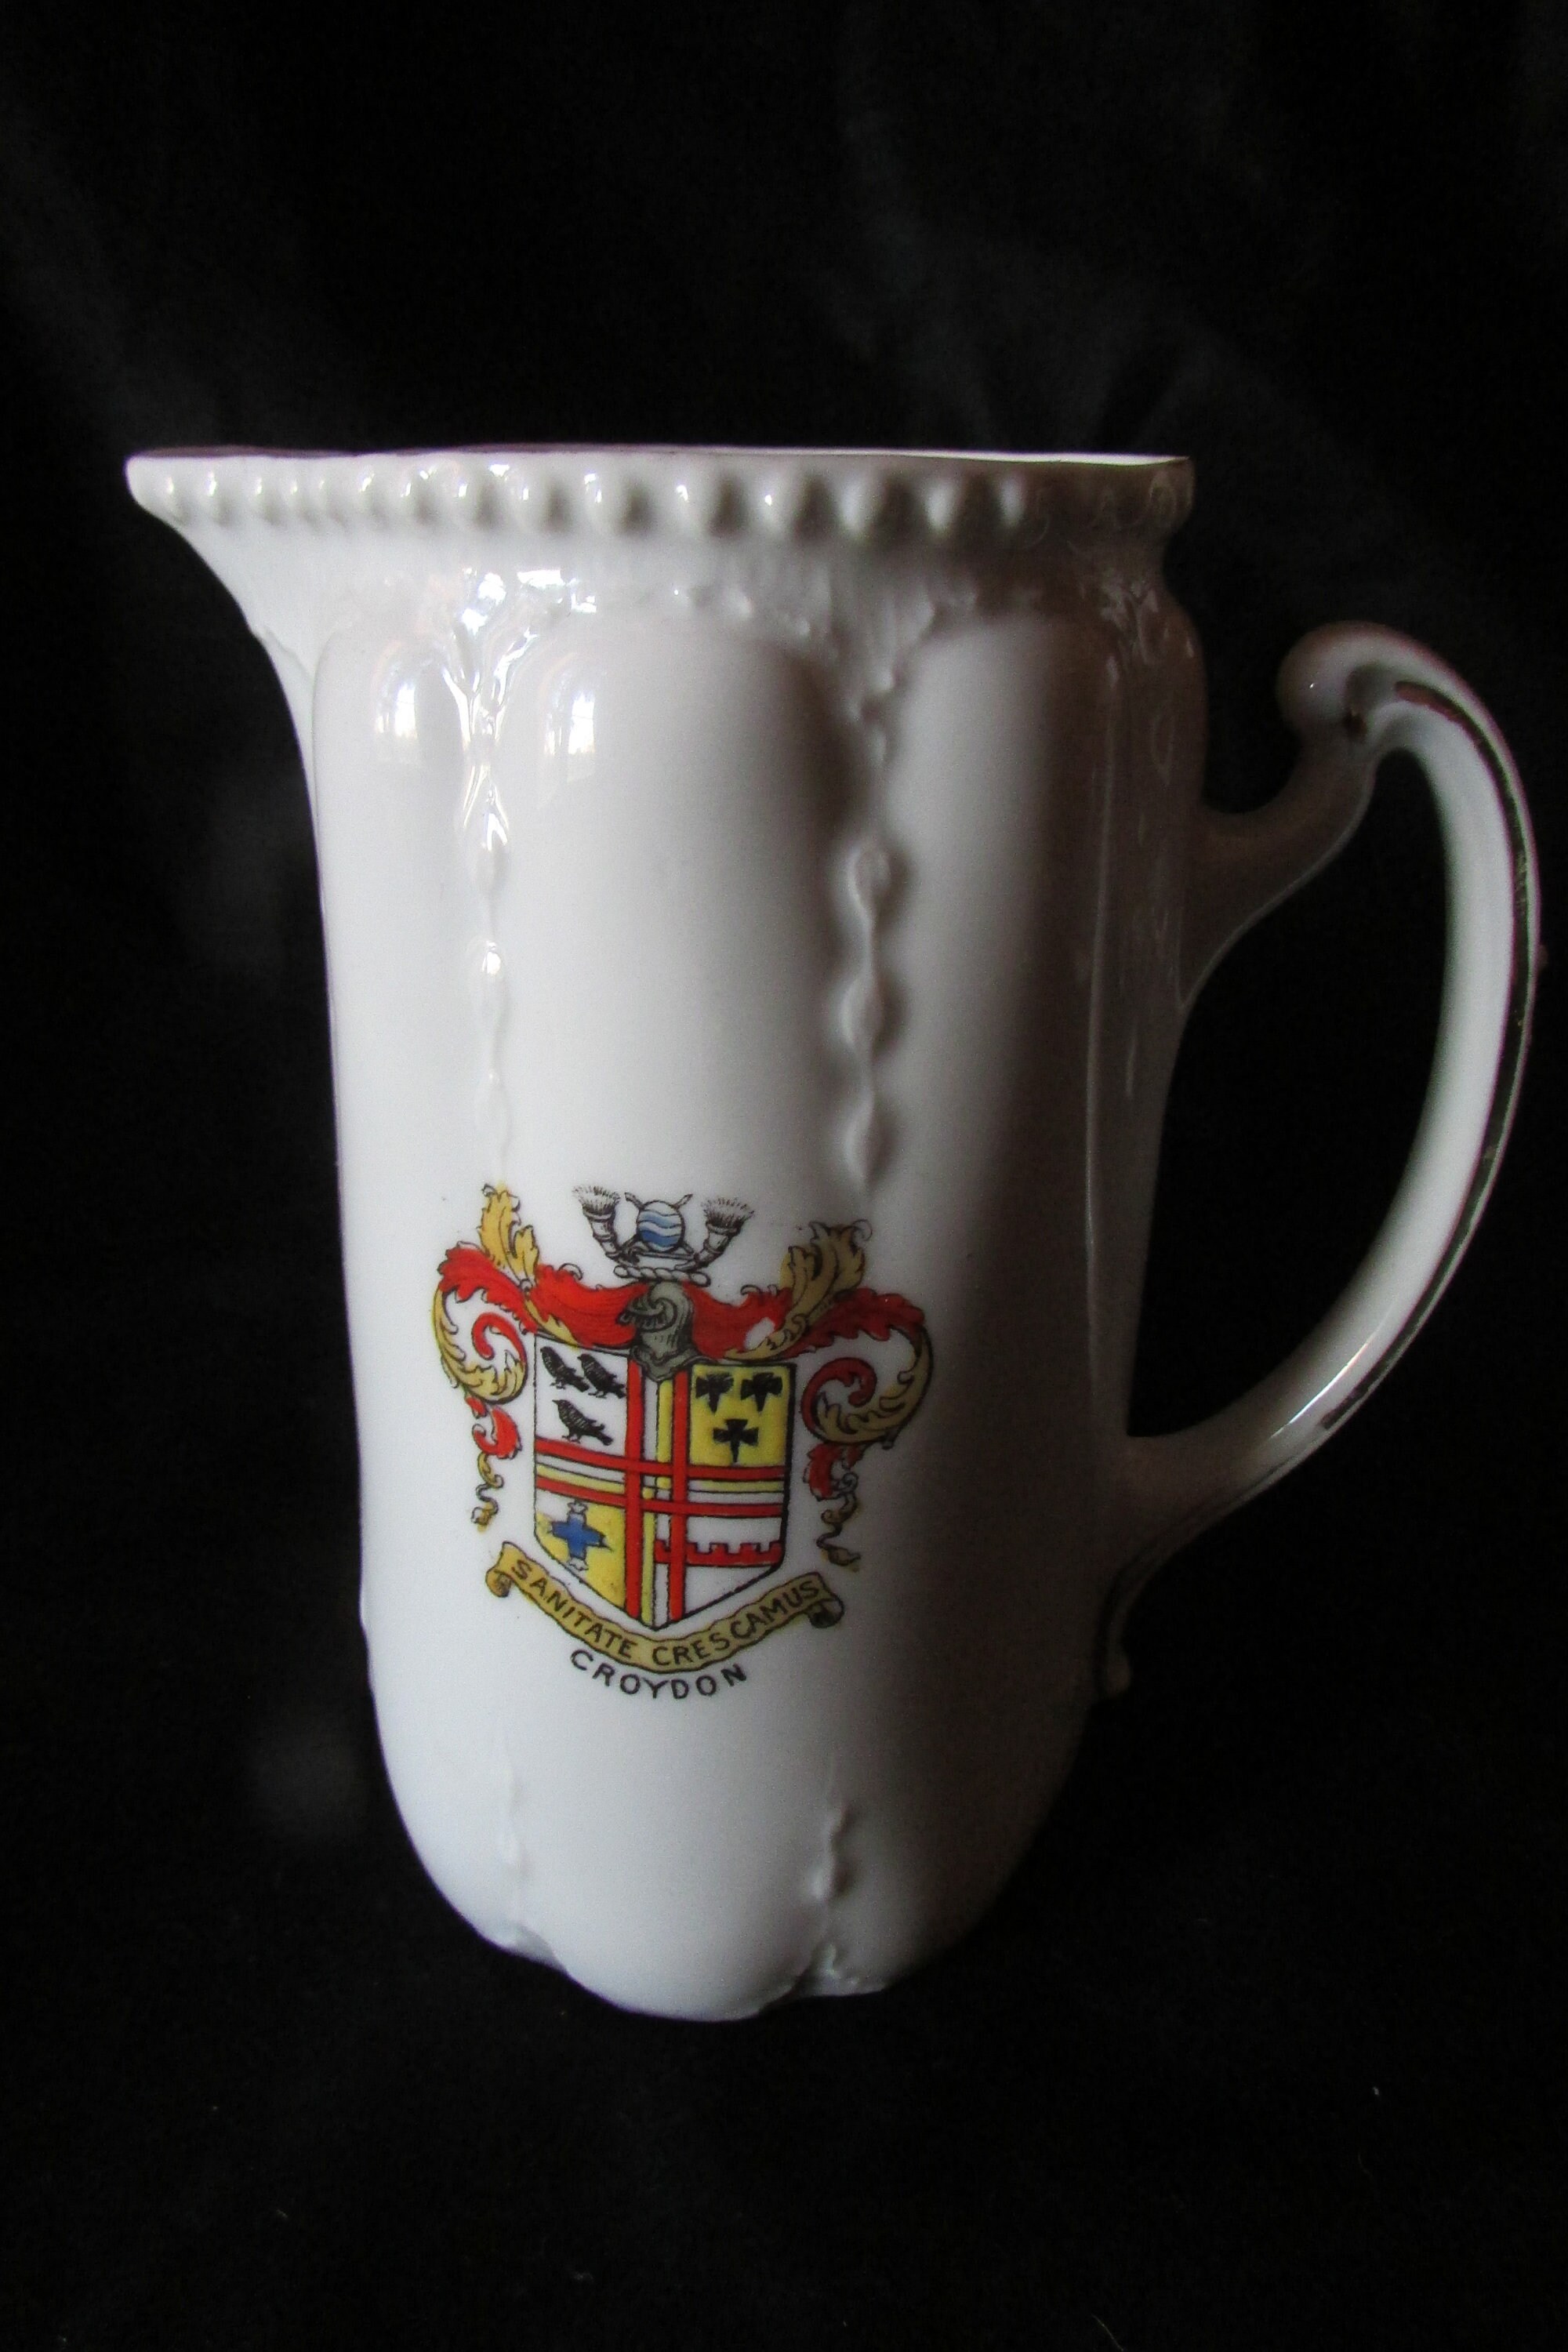 Vintage Anglais Crested China Porcelain Souvenir Ware Croydon England Jug Pitcher